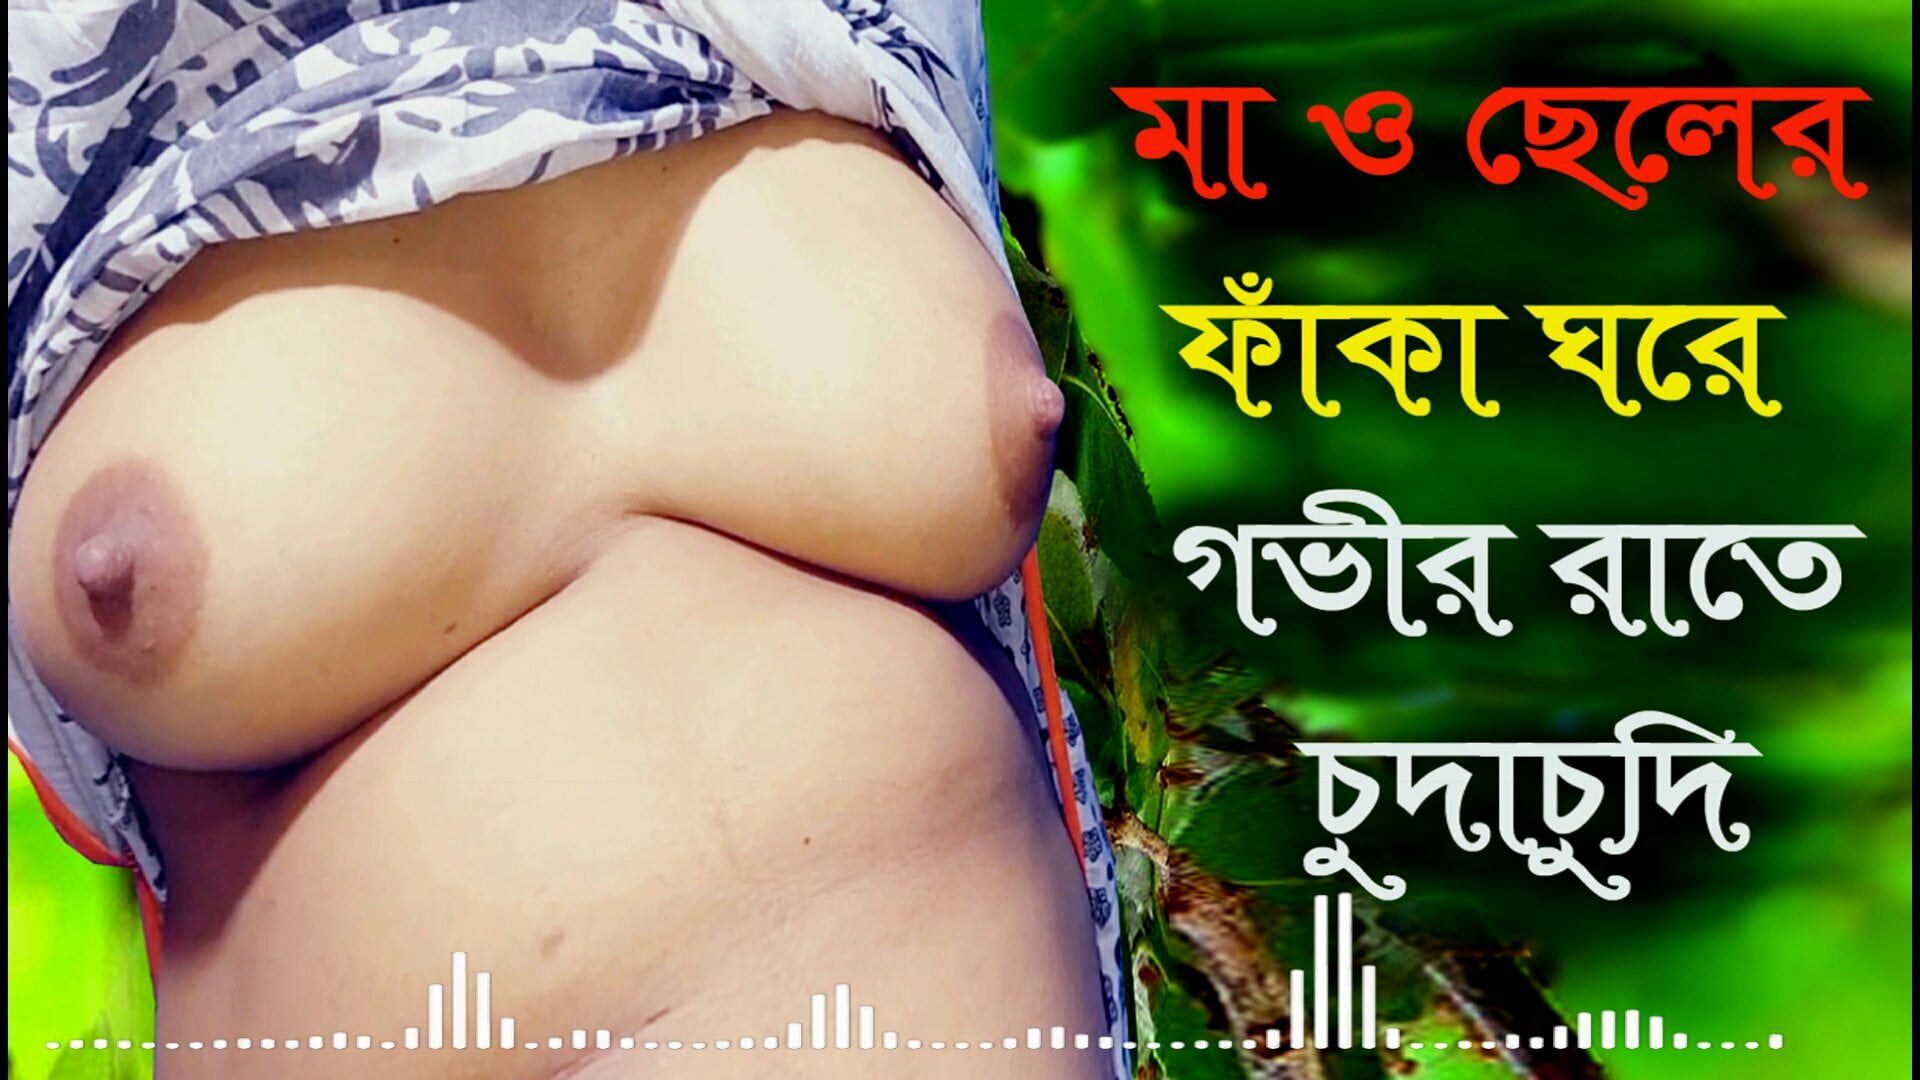 Audio sex stories bengali